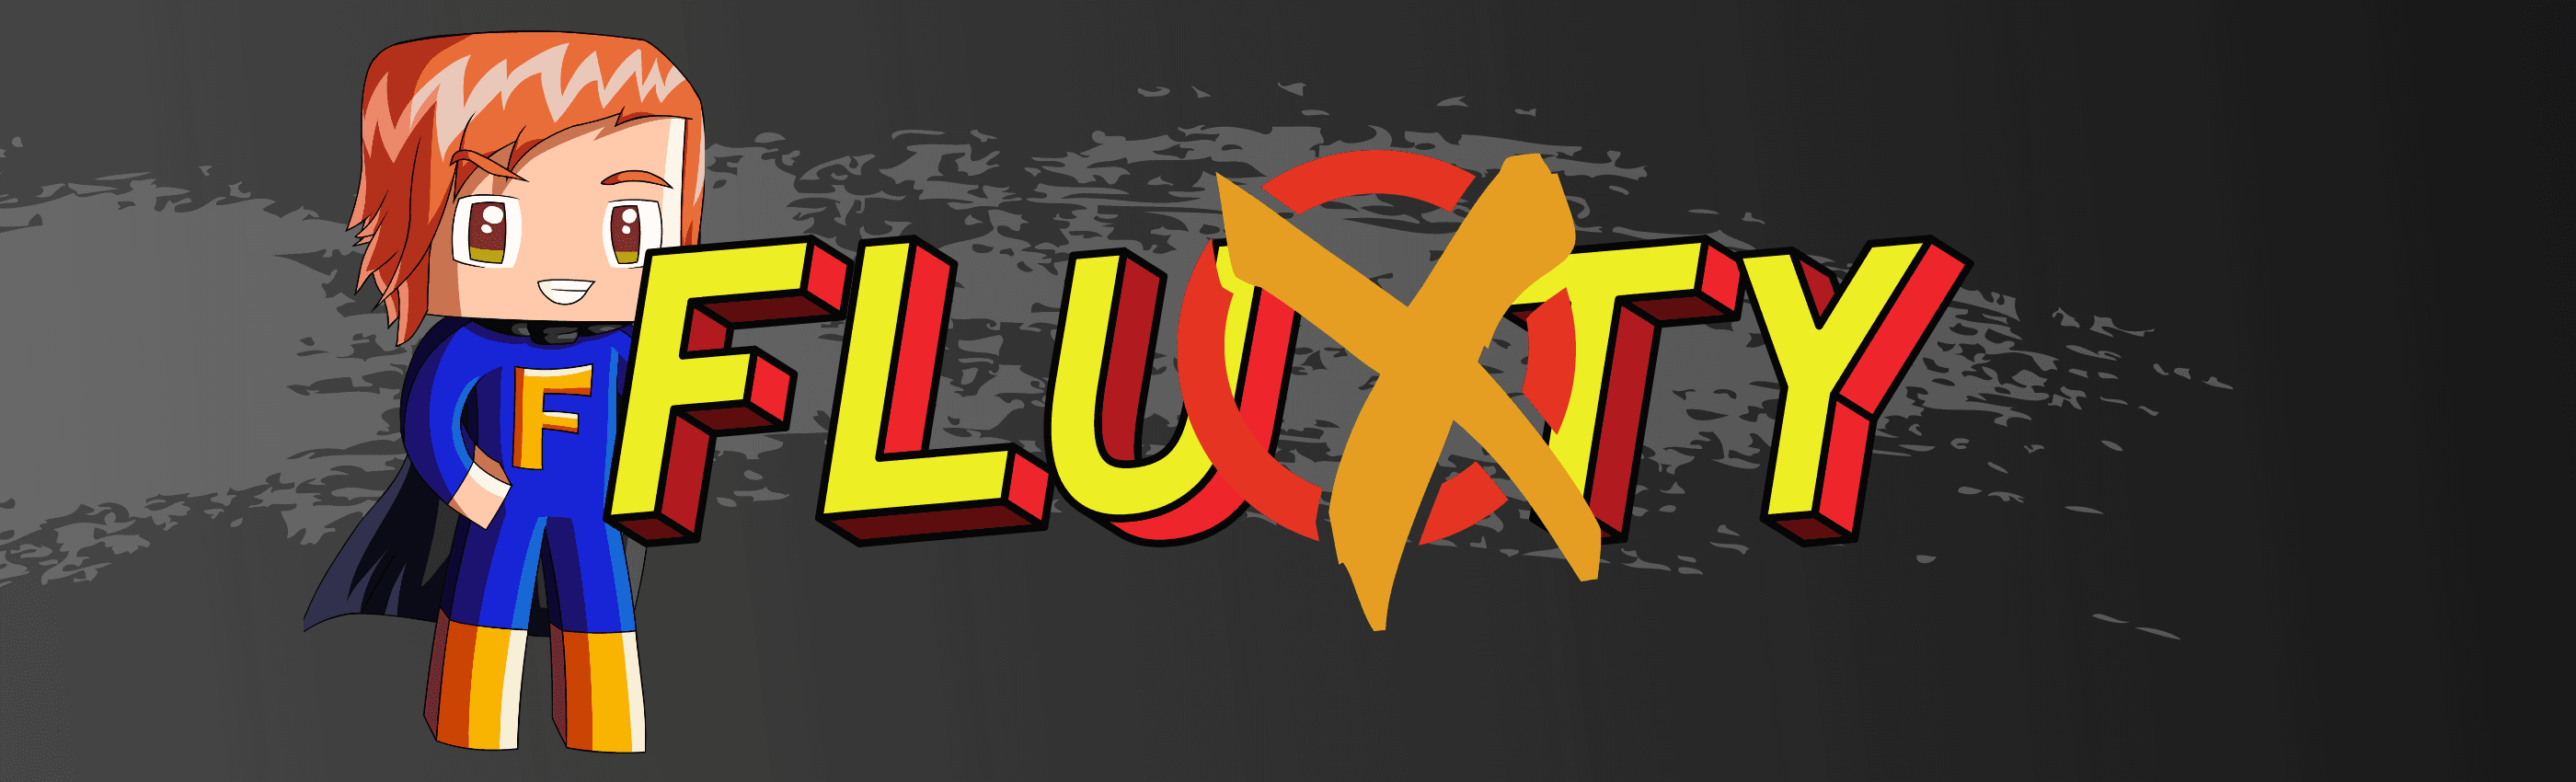 Fluxty banner